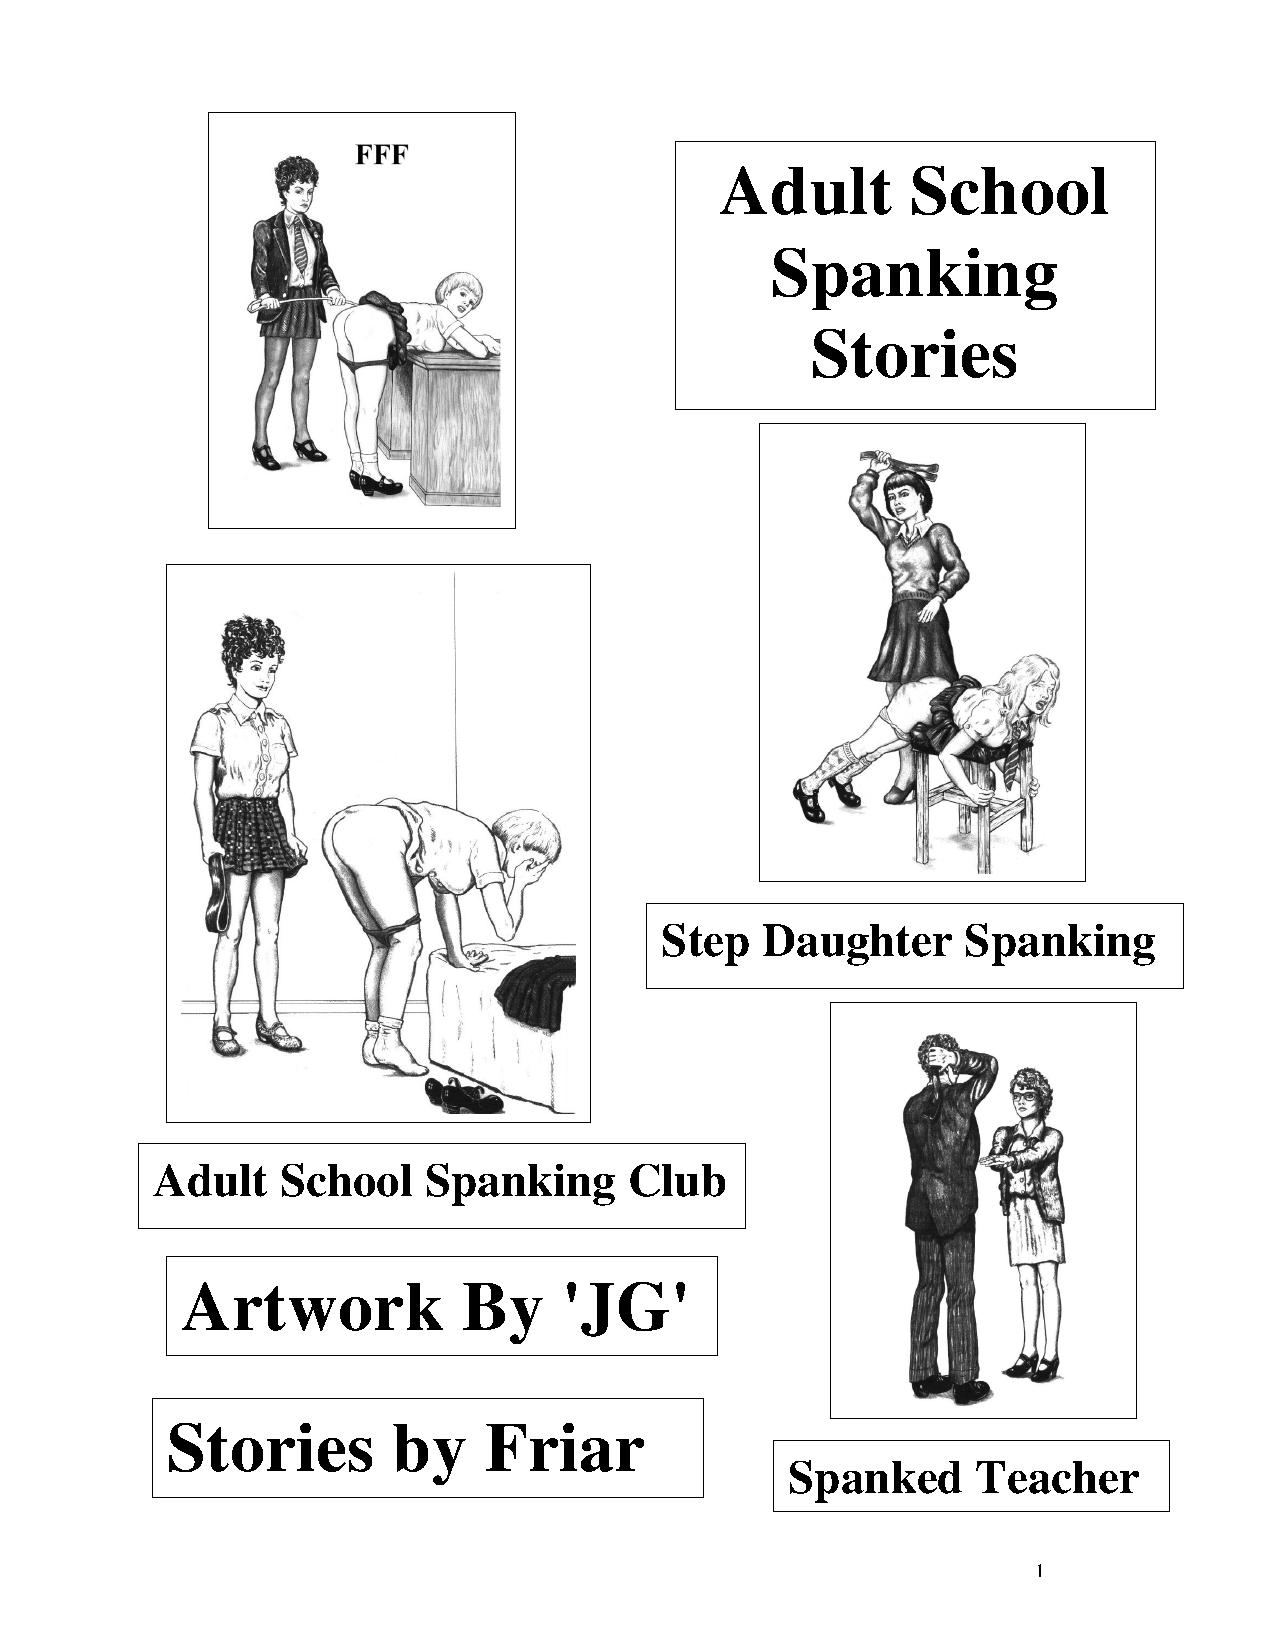 Reform School Spanking Stories